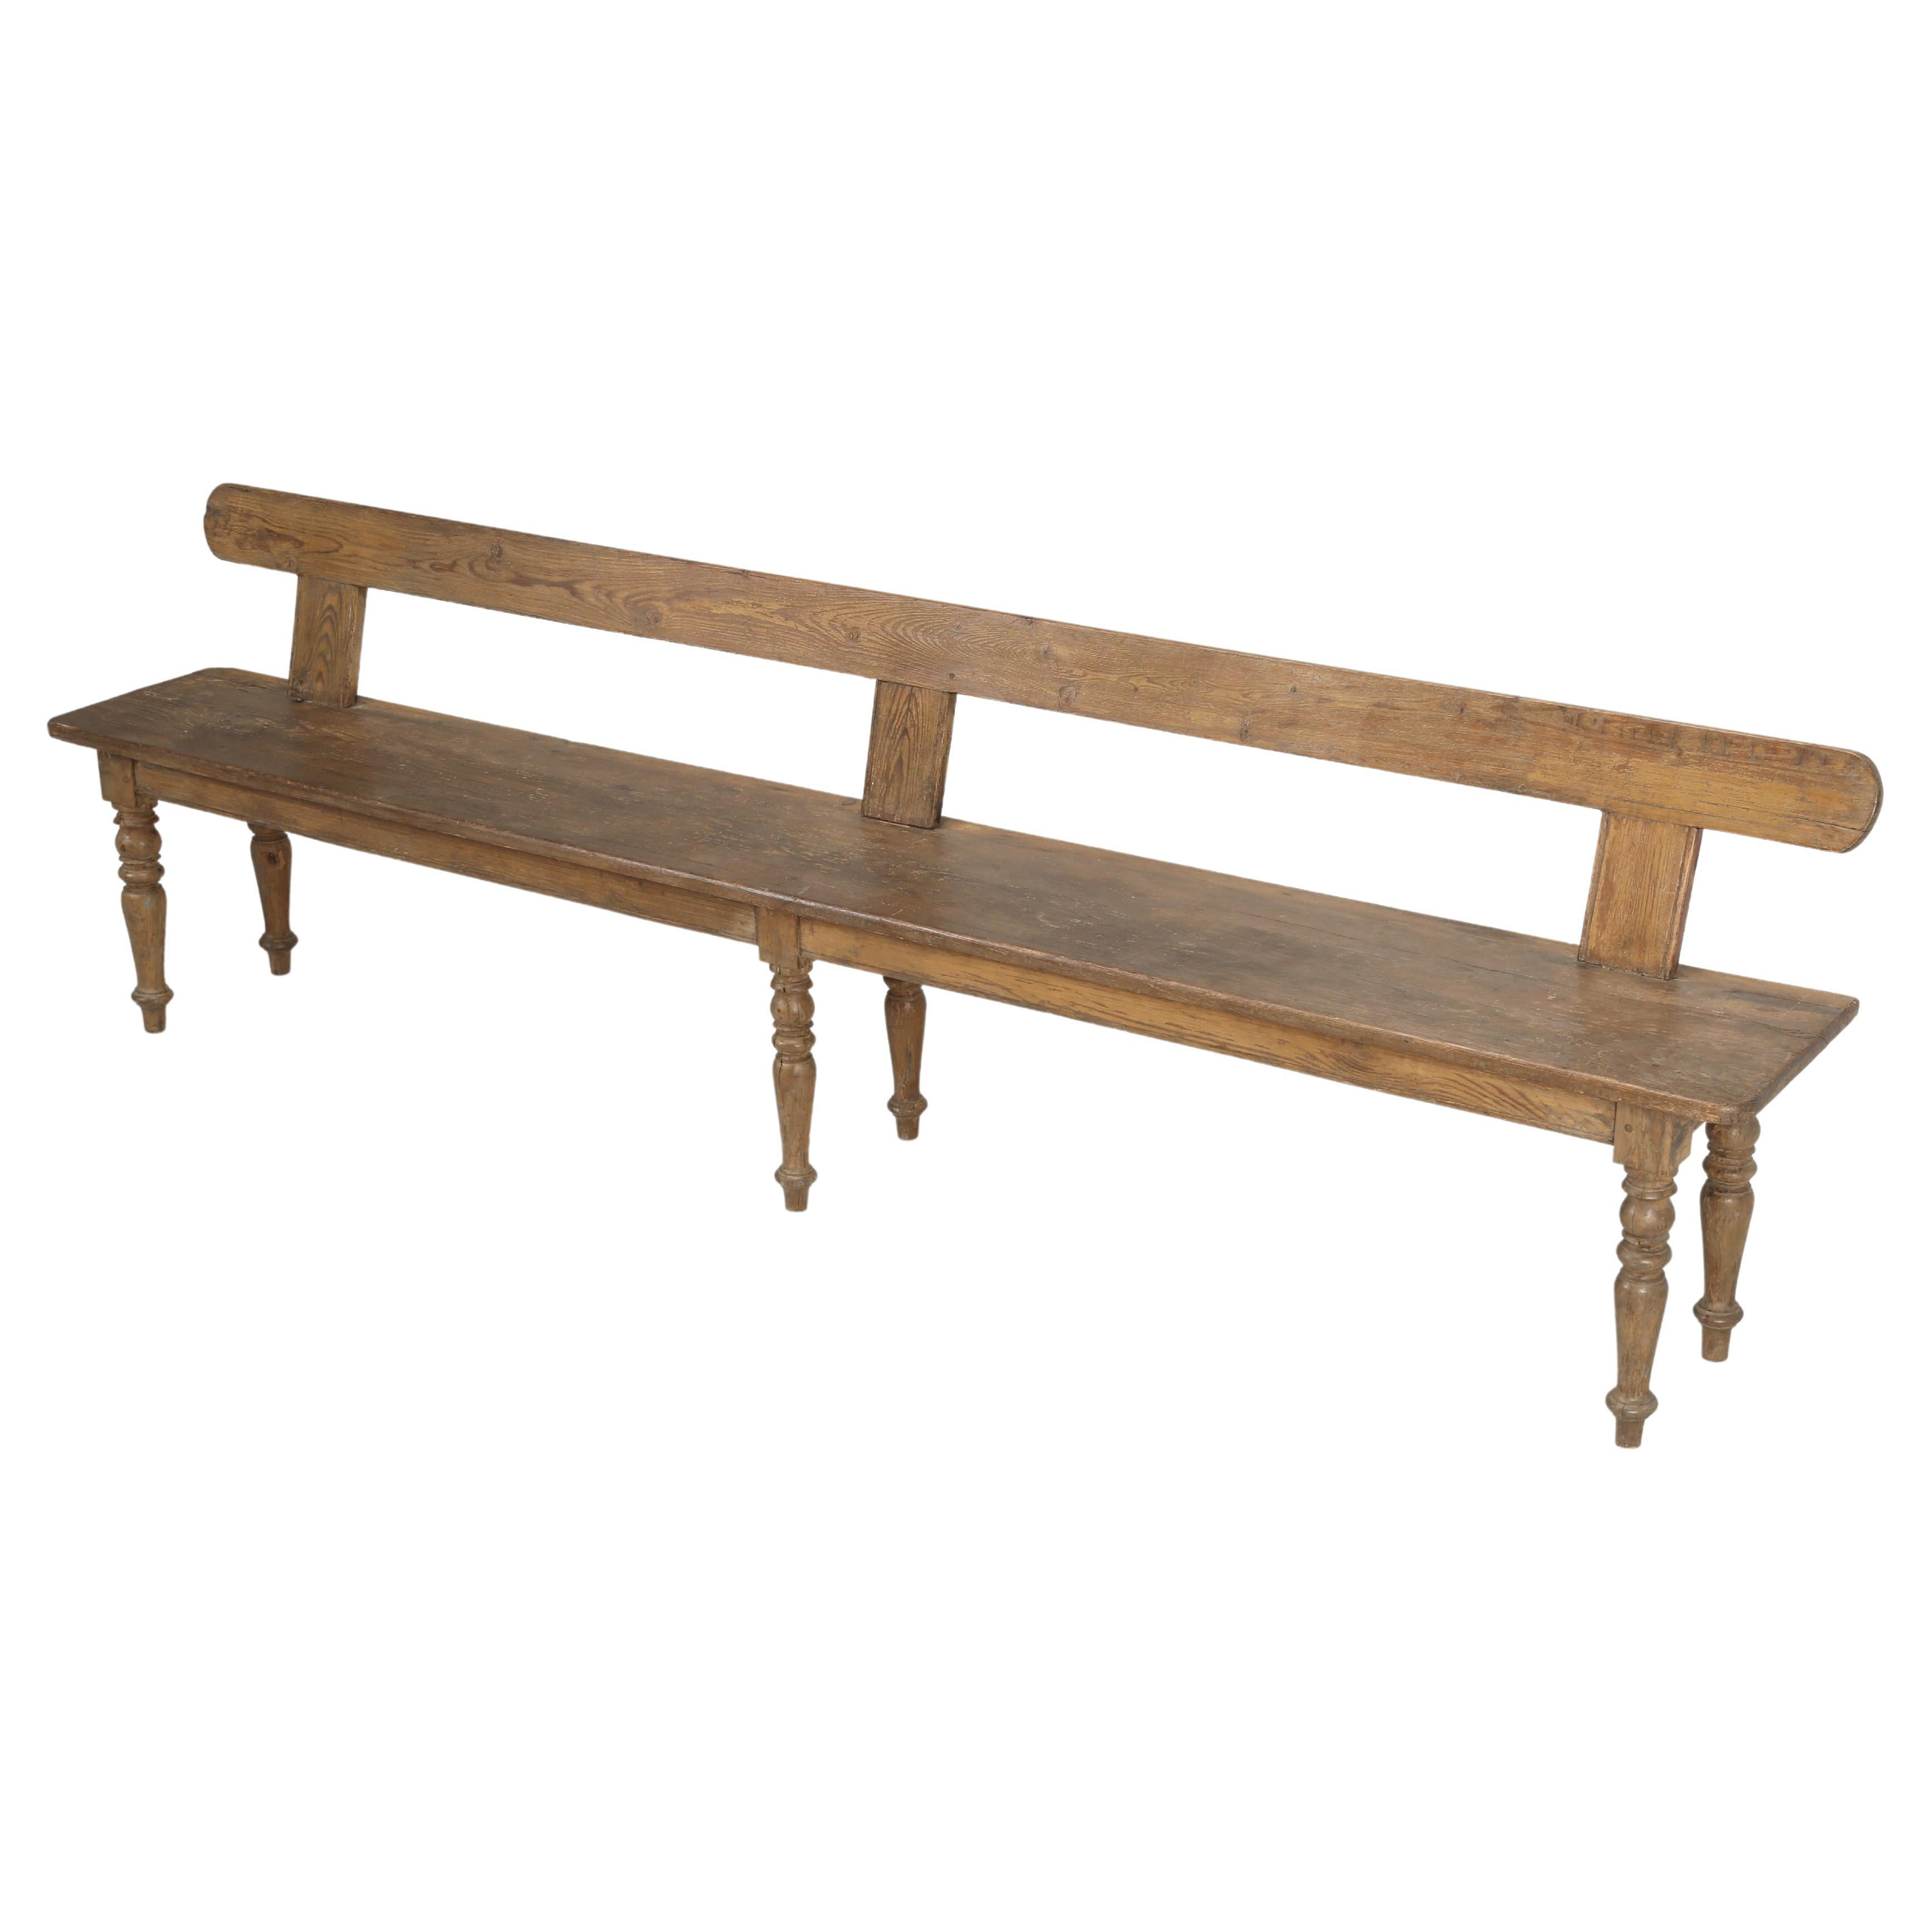 Antique English Oak Bench Comfortable Great Patina Original Finish Late 1800's